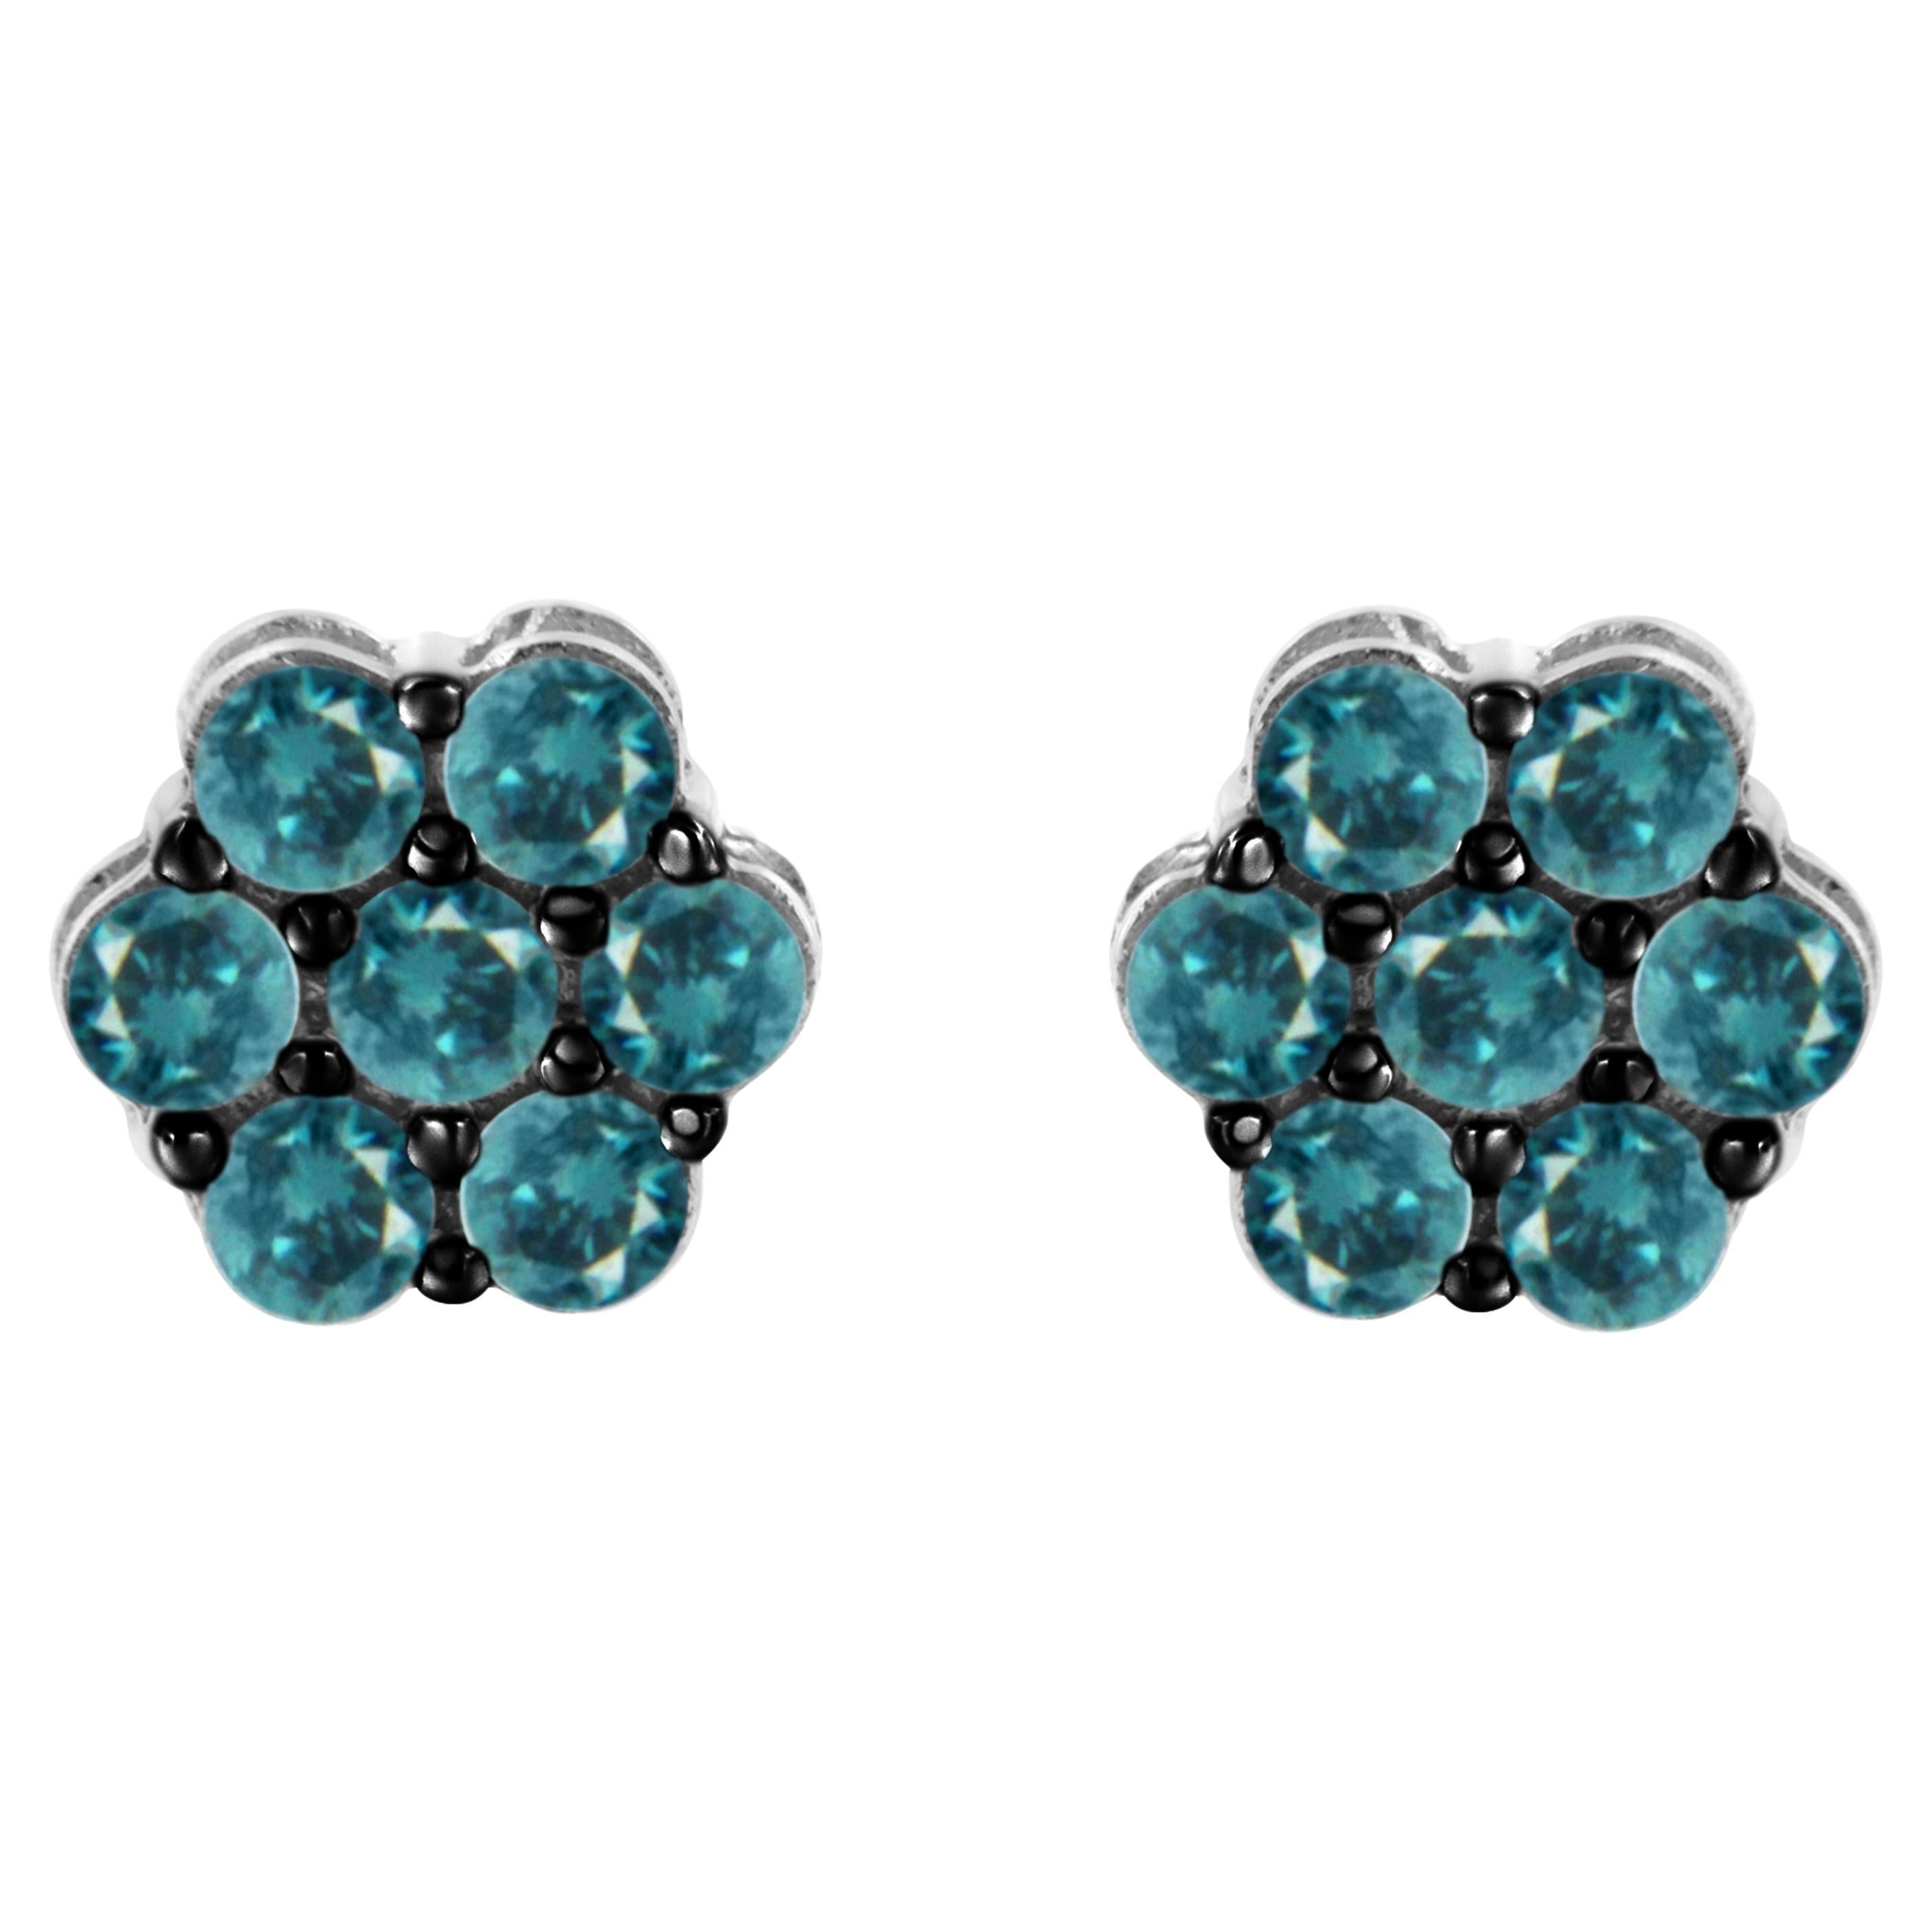 .925 Sterling Silver Treated Blue 1.0 Carat Diamond Floral Stud Earrings